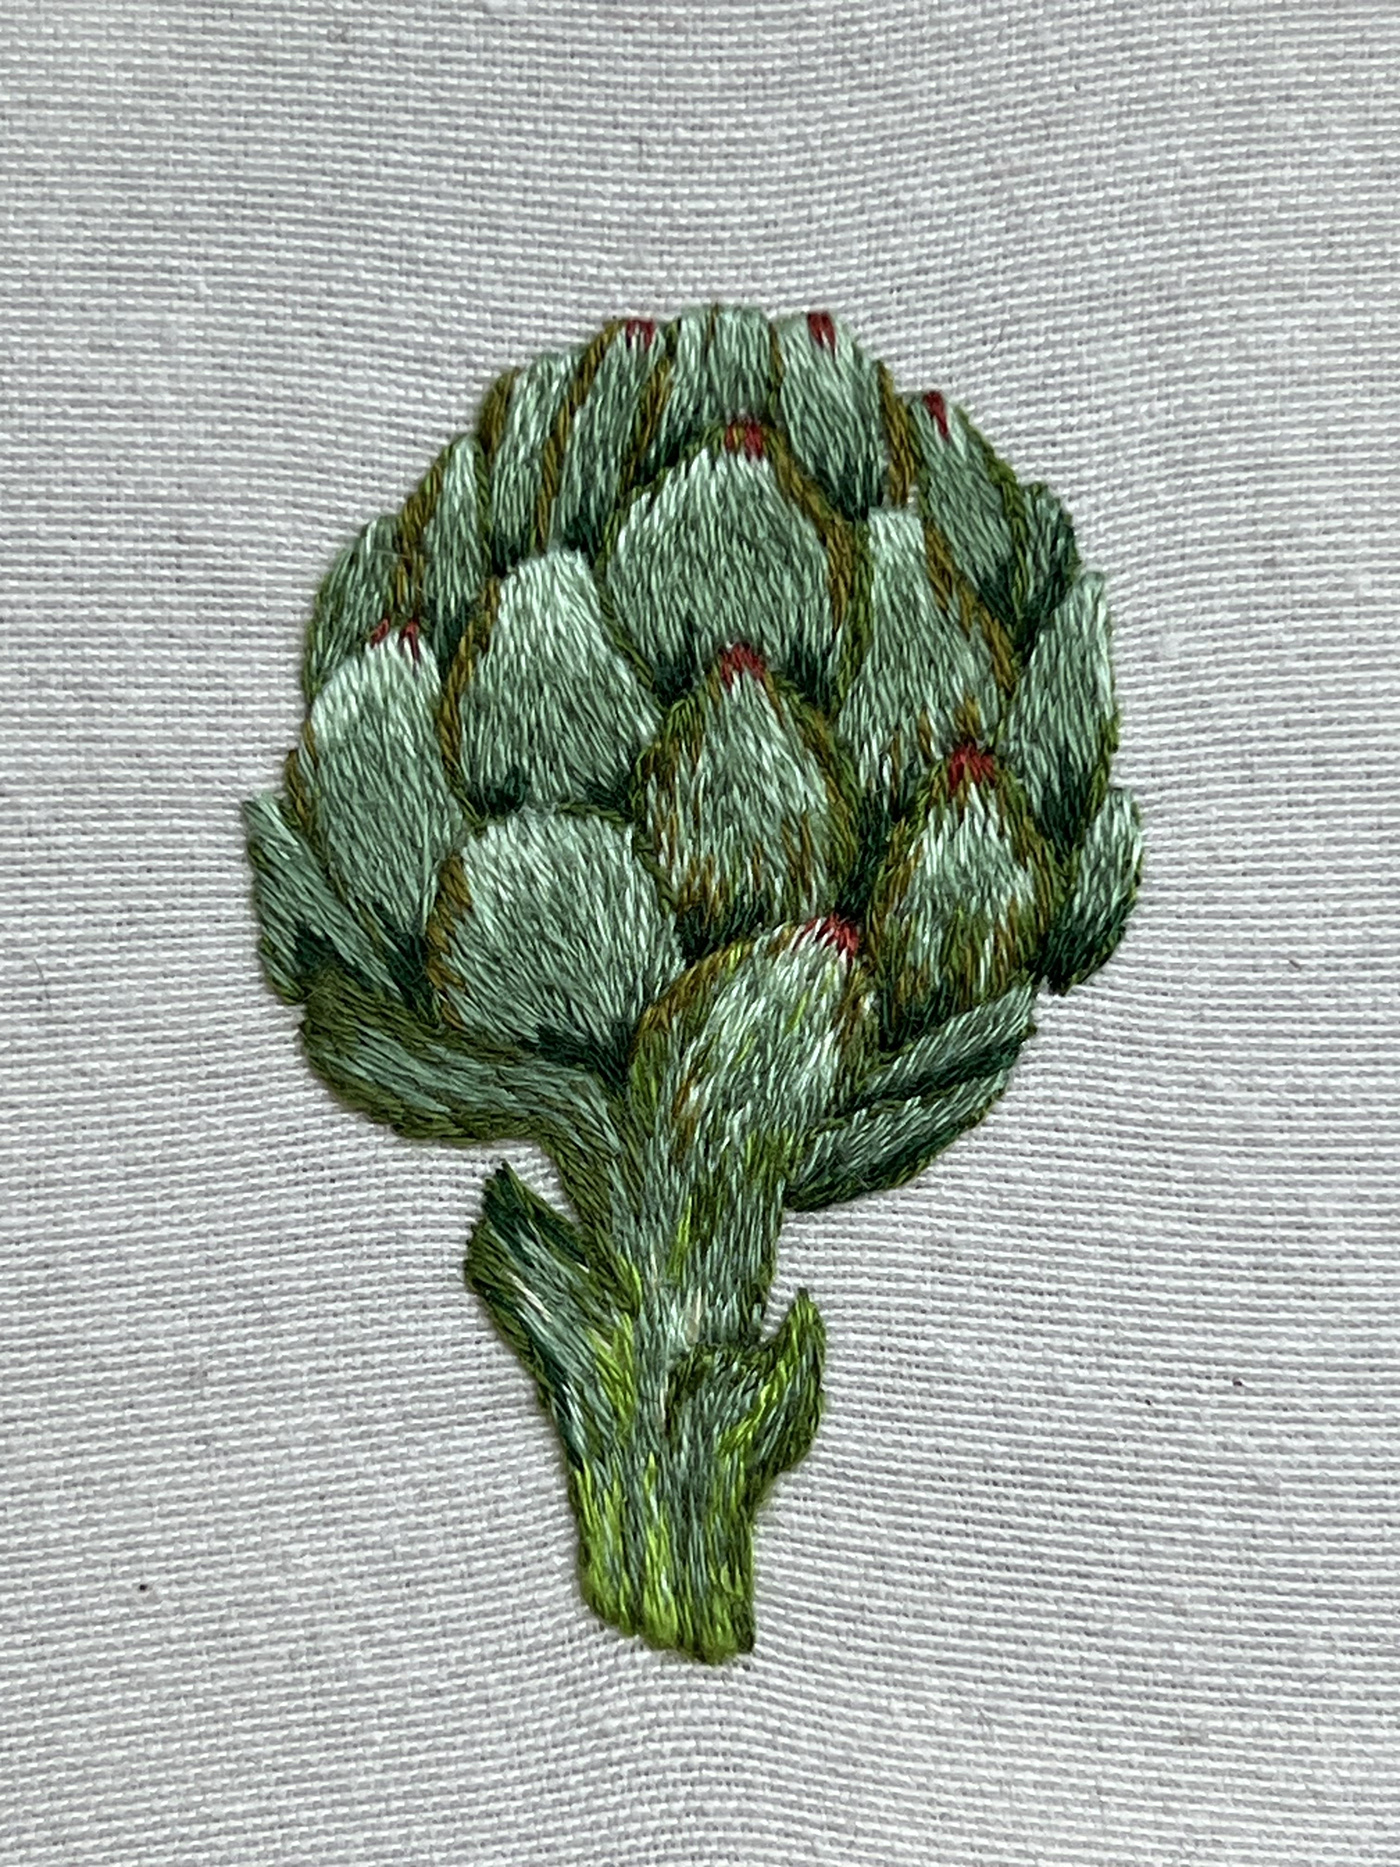 Bordadoamano embroidery